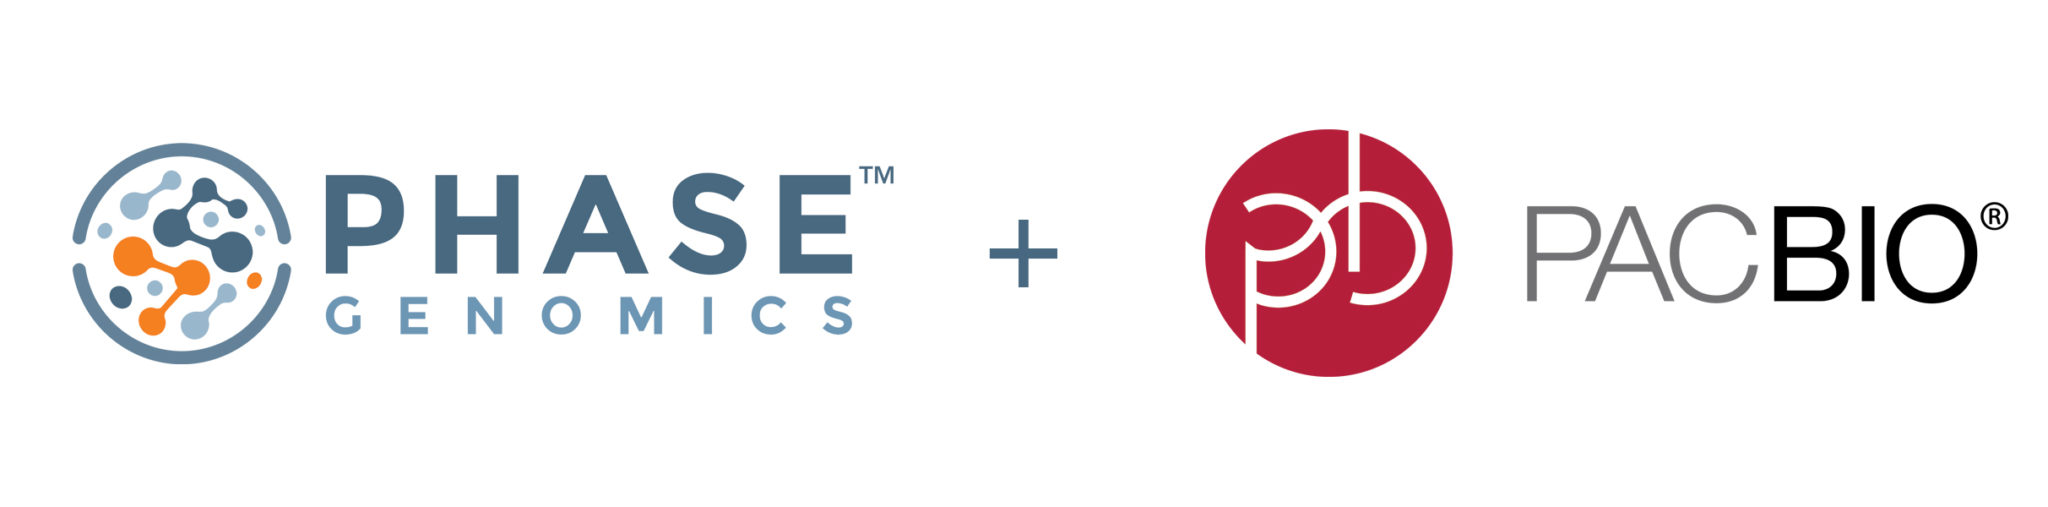 Phase Genomics and Pacific Biosciences logos